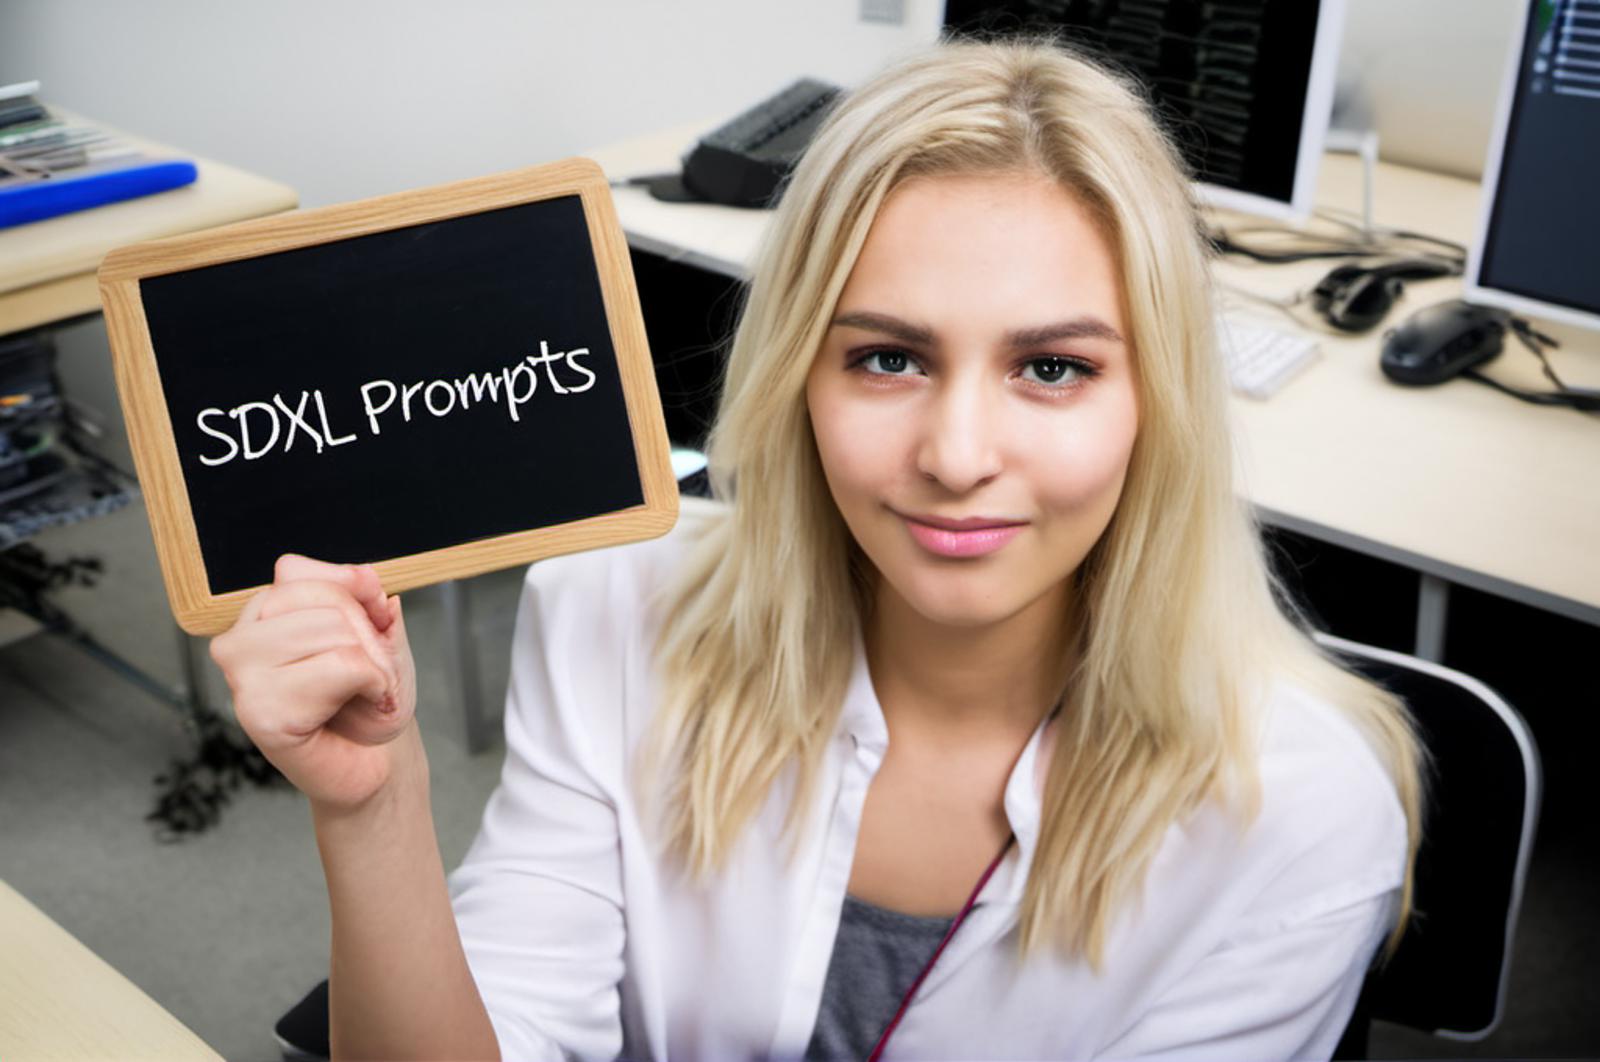 SDXL-Prompts